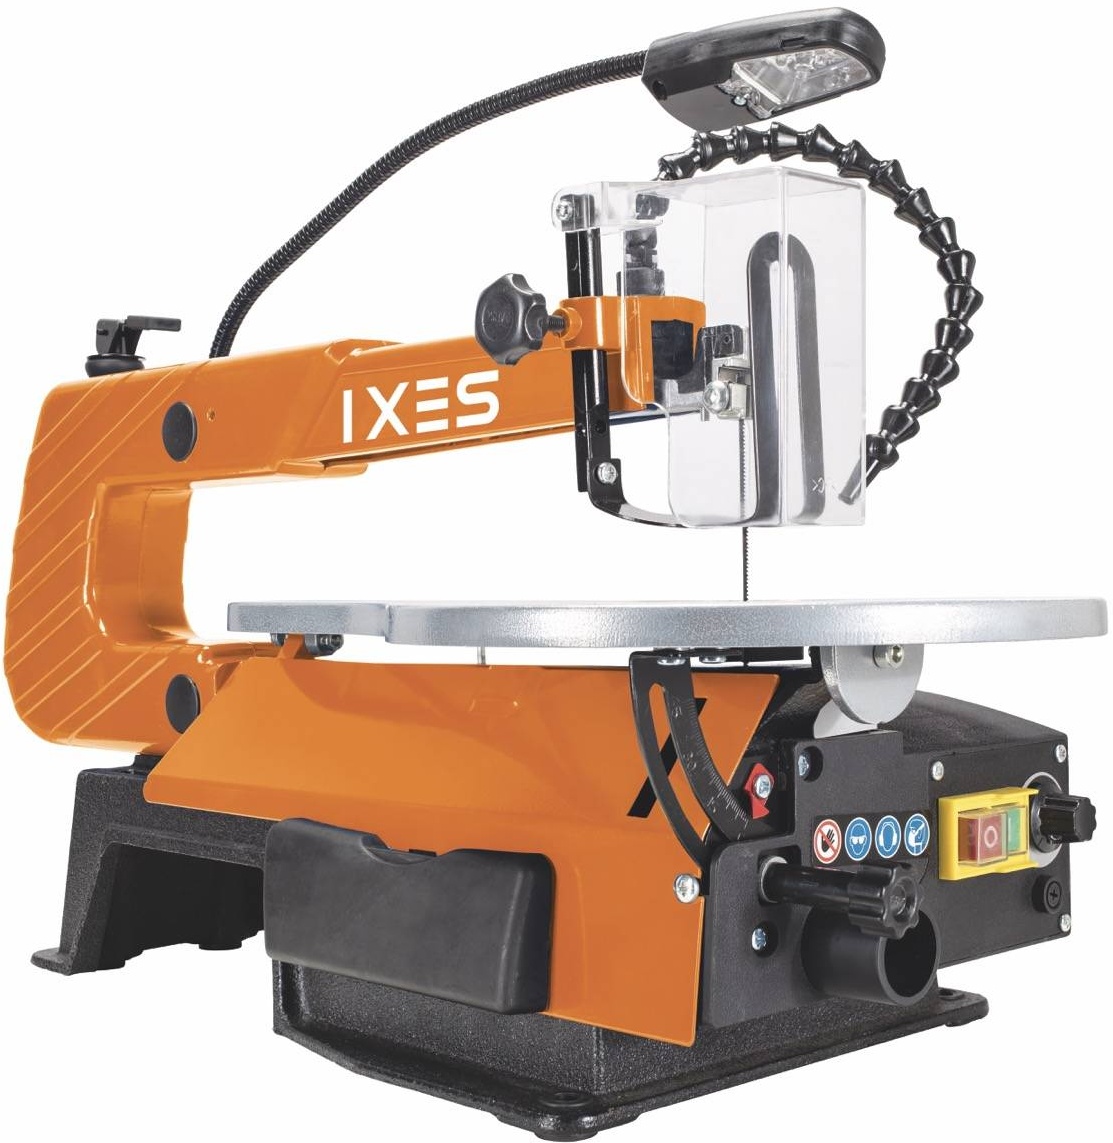 IXES Dekupiersäge IX-DKS1600 Modellbausäge | 120W Leistung | 50mm Schnitthöhe...